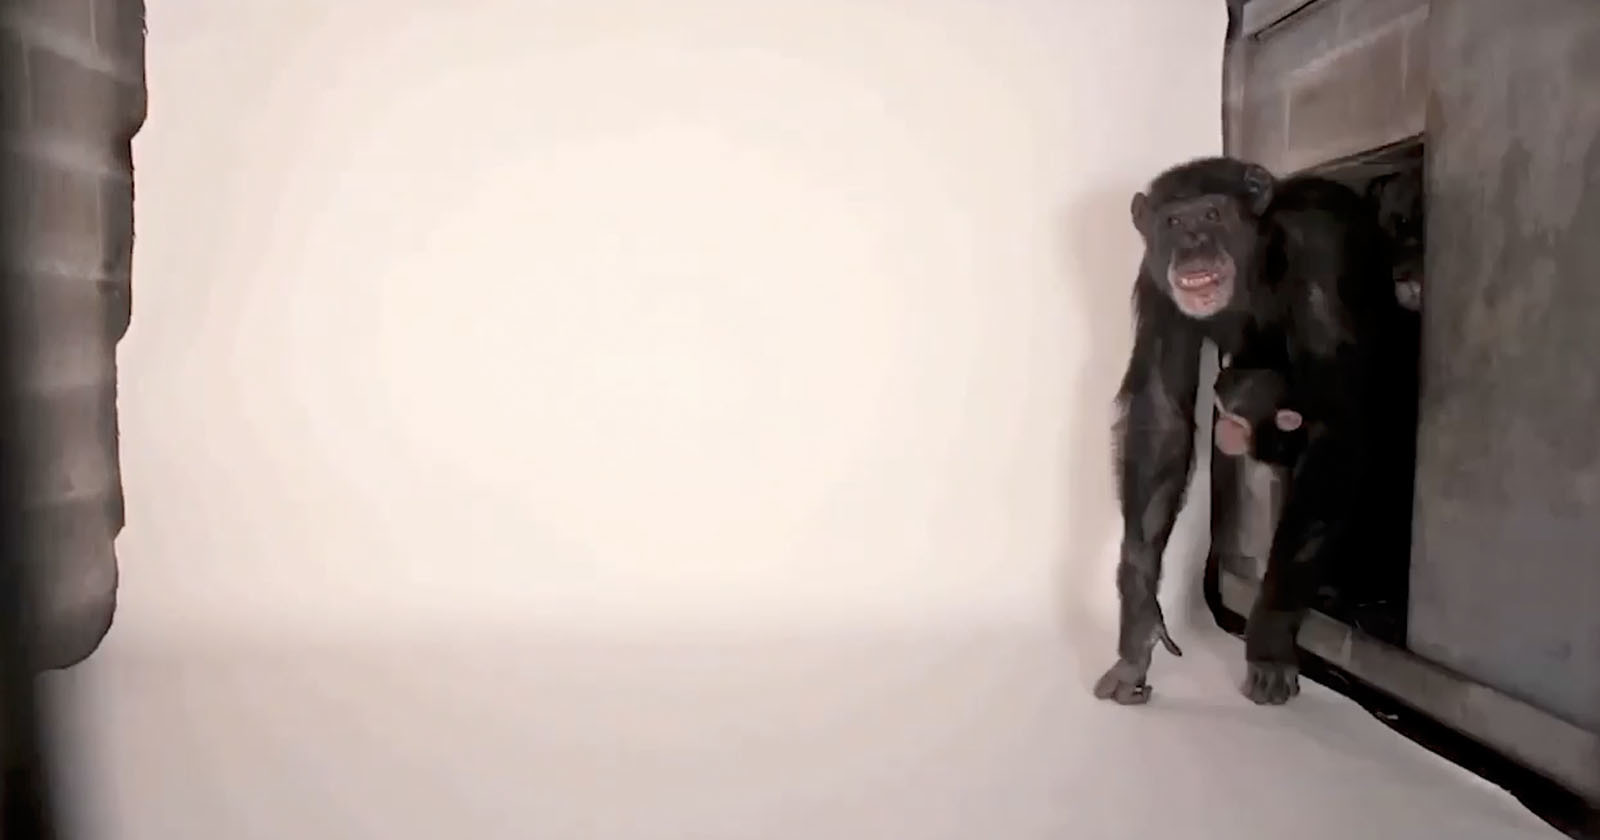 How a Chimpanzee Ruined a Photographers Makeshift Studio